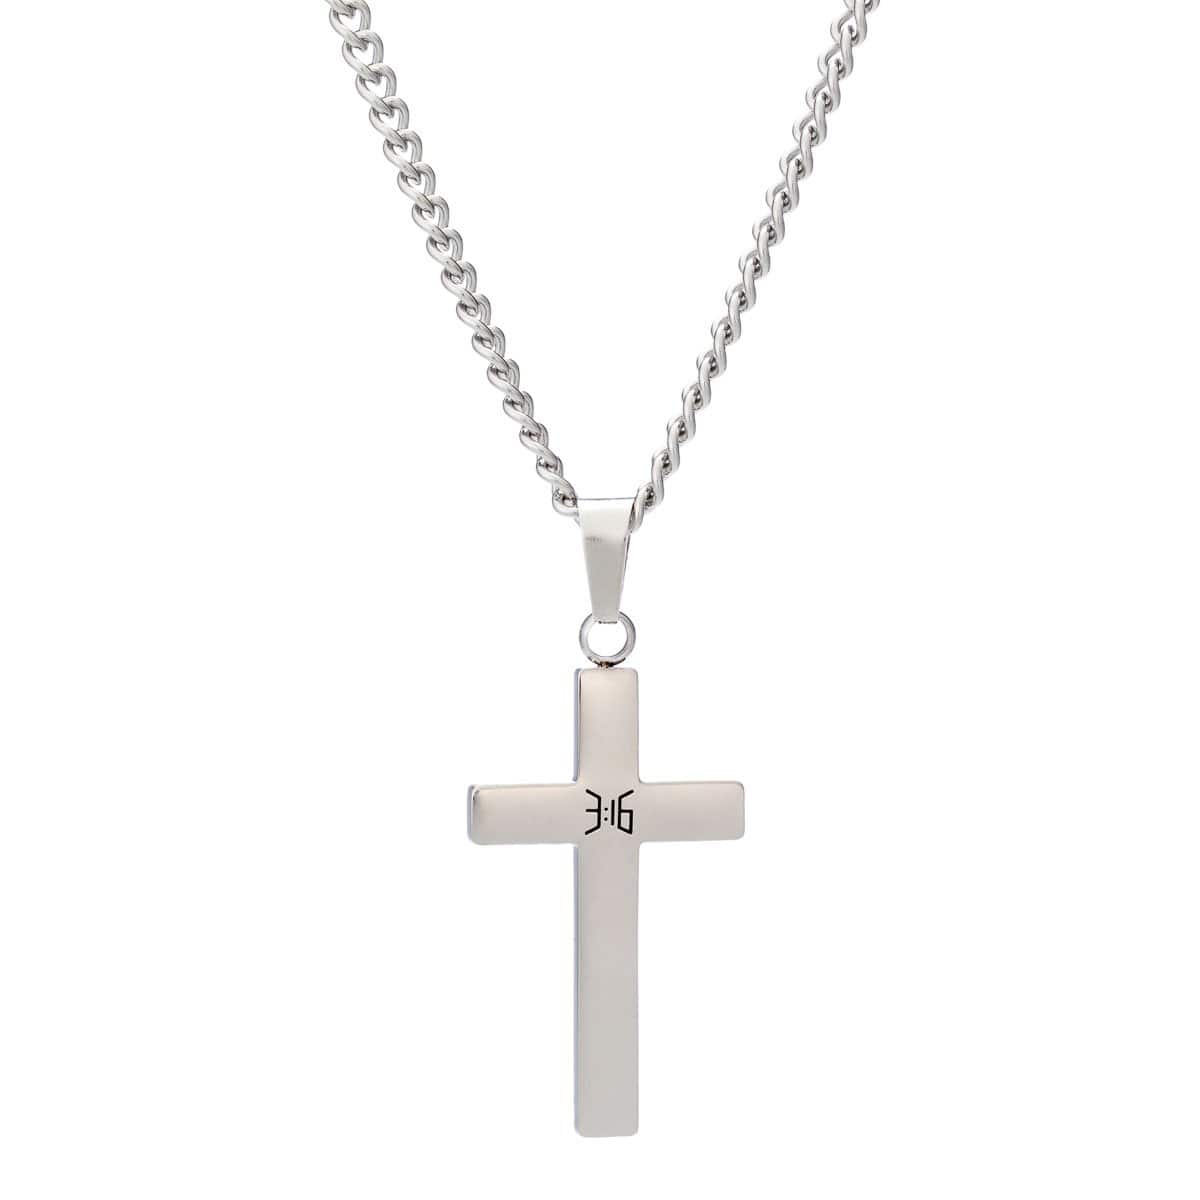 3:16 Believe Cross Necklace